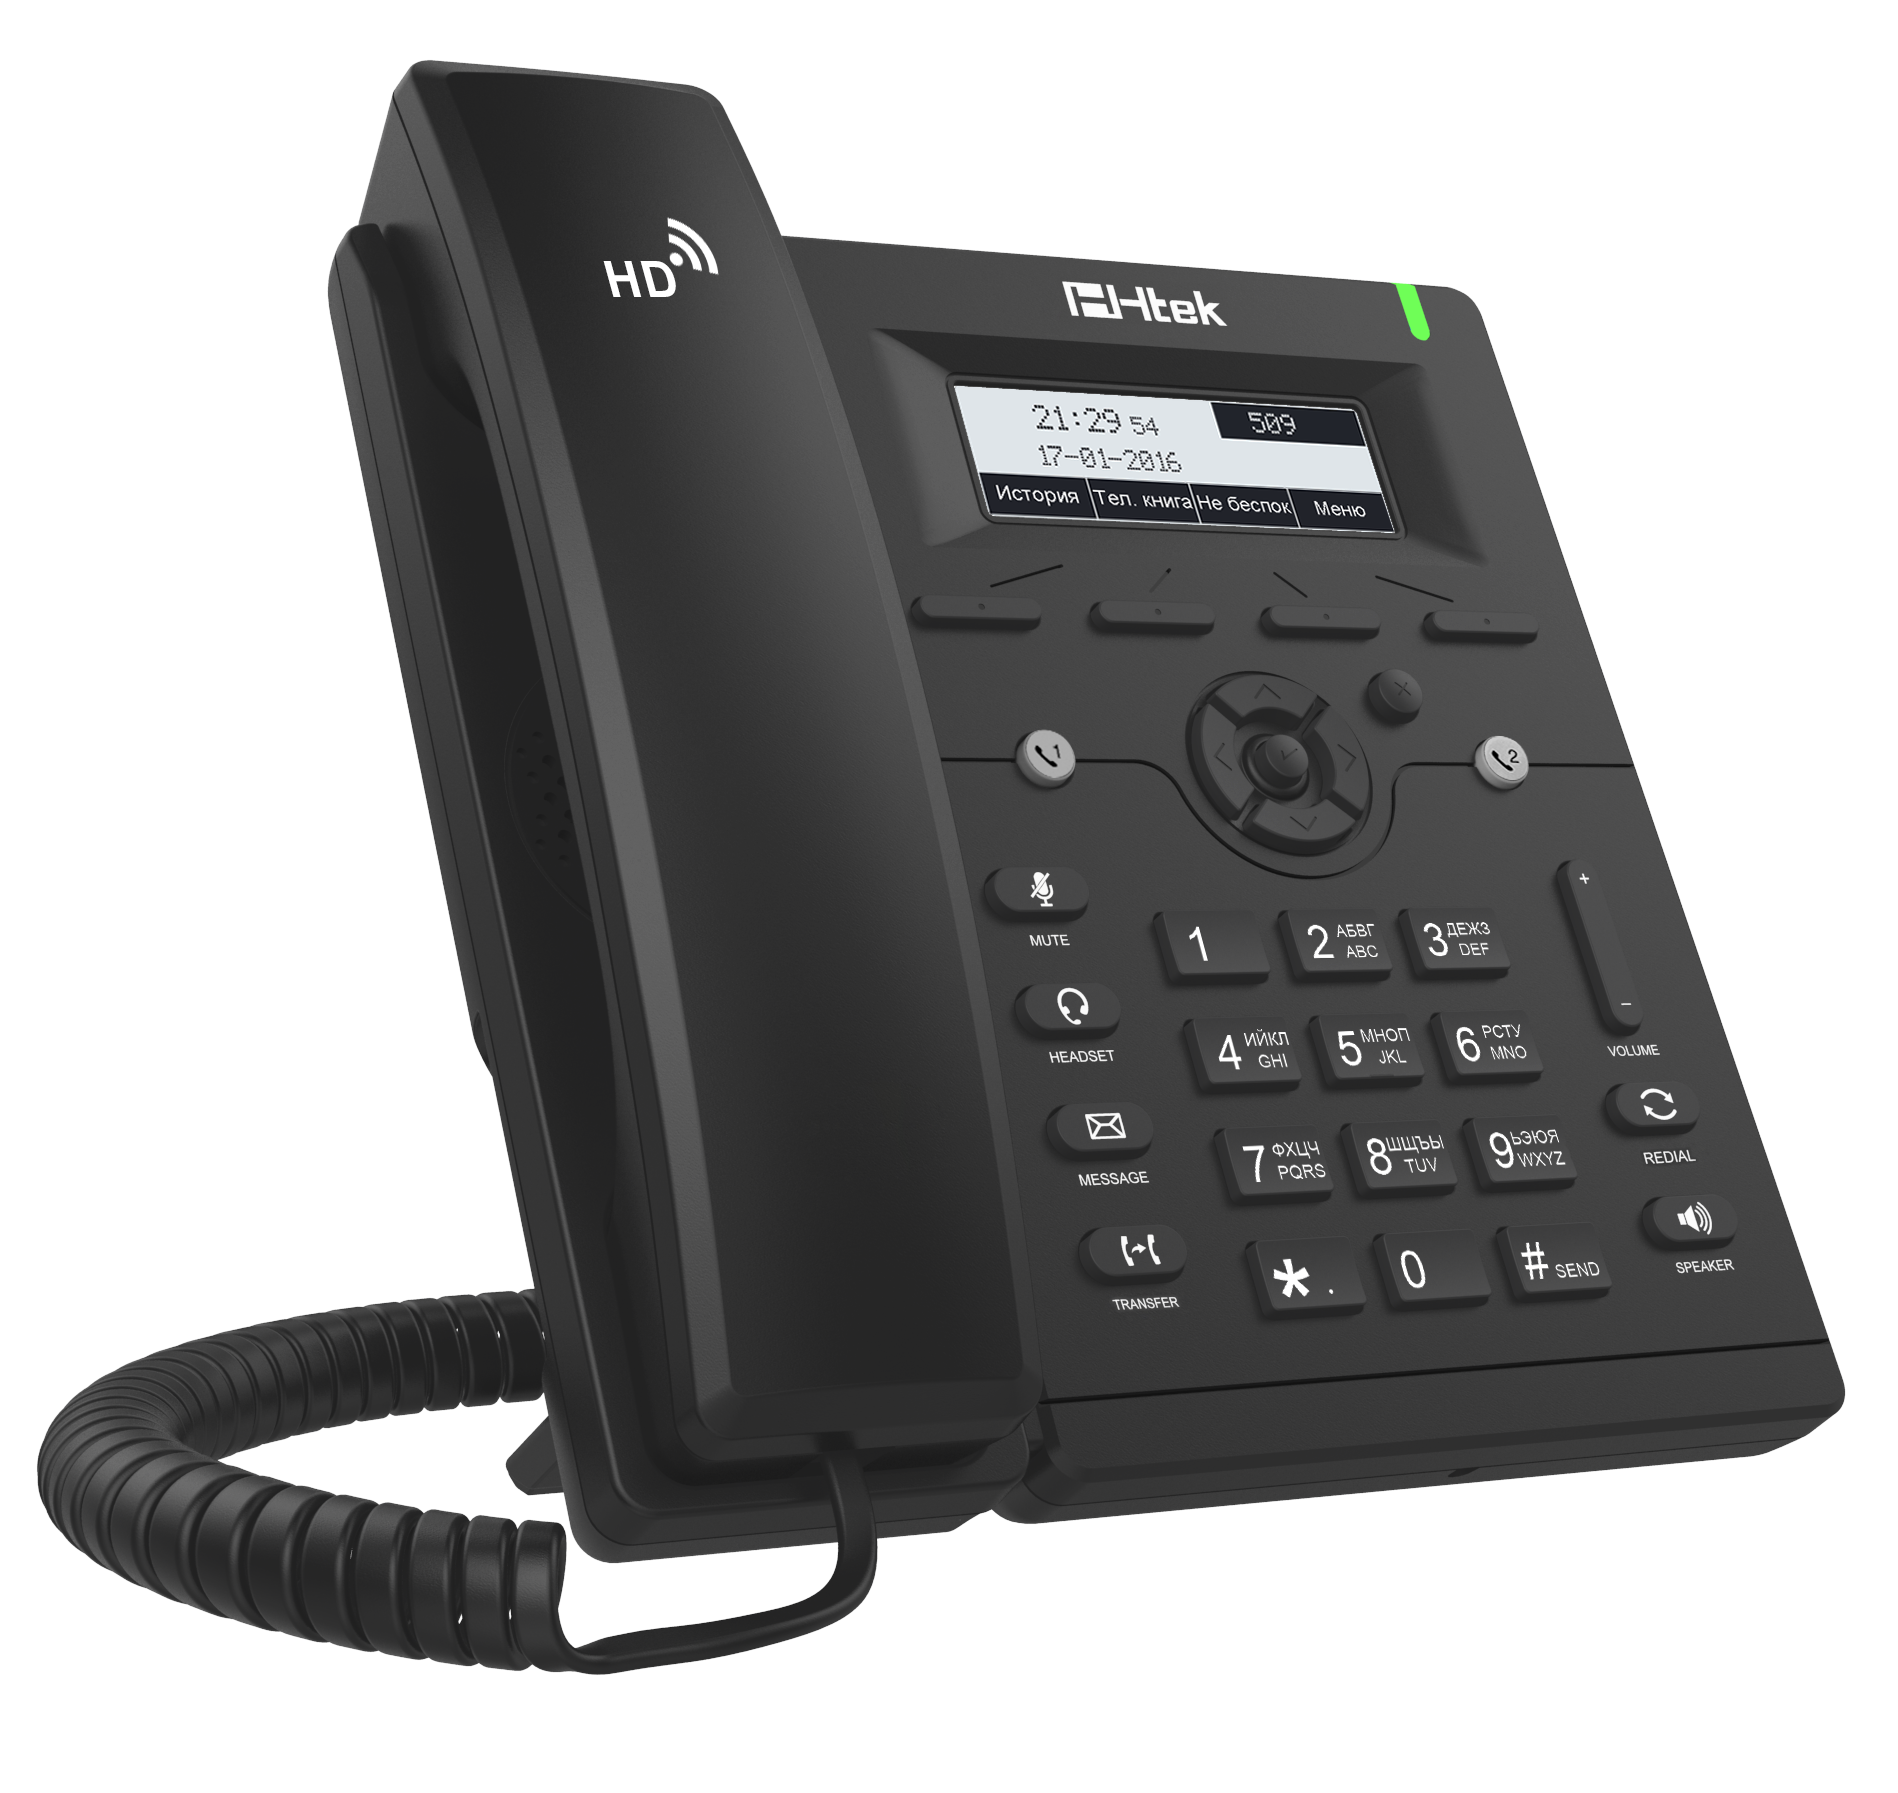 UC902 RU Корпоративный IP-телефон начального уровня